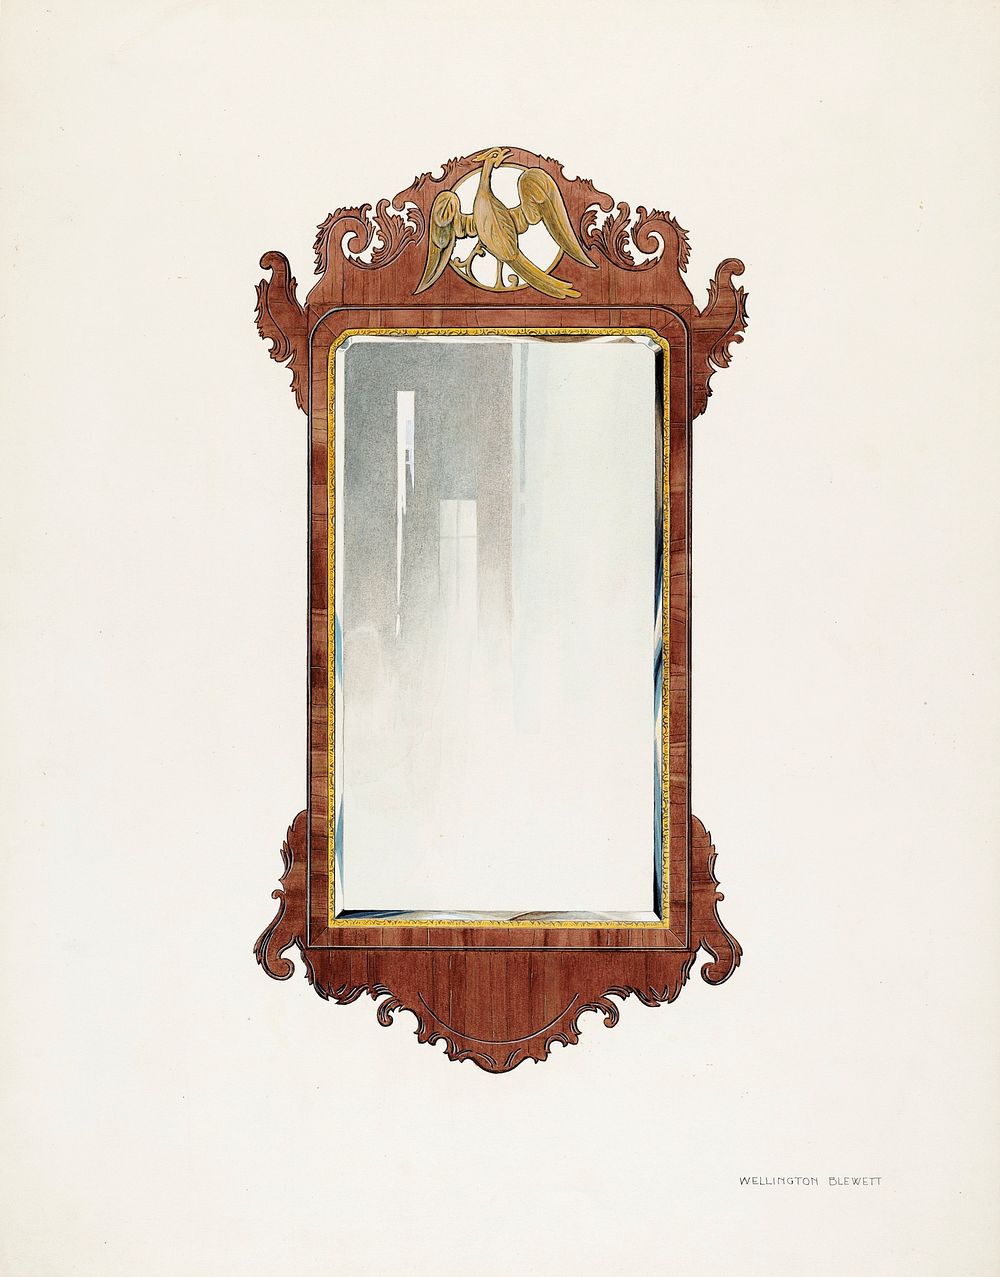 Mirror (ca.1937) by Wellington Blewett. Original from The National Gallery of Art. Digitally enhanced by rawpixel.